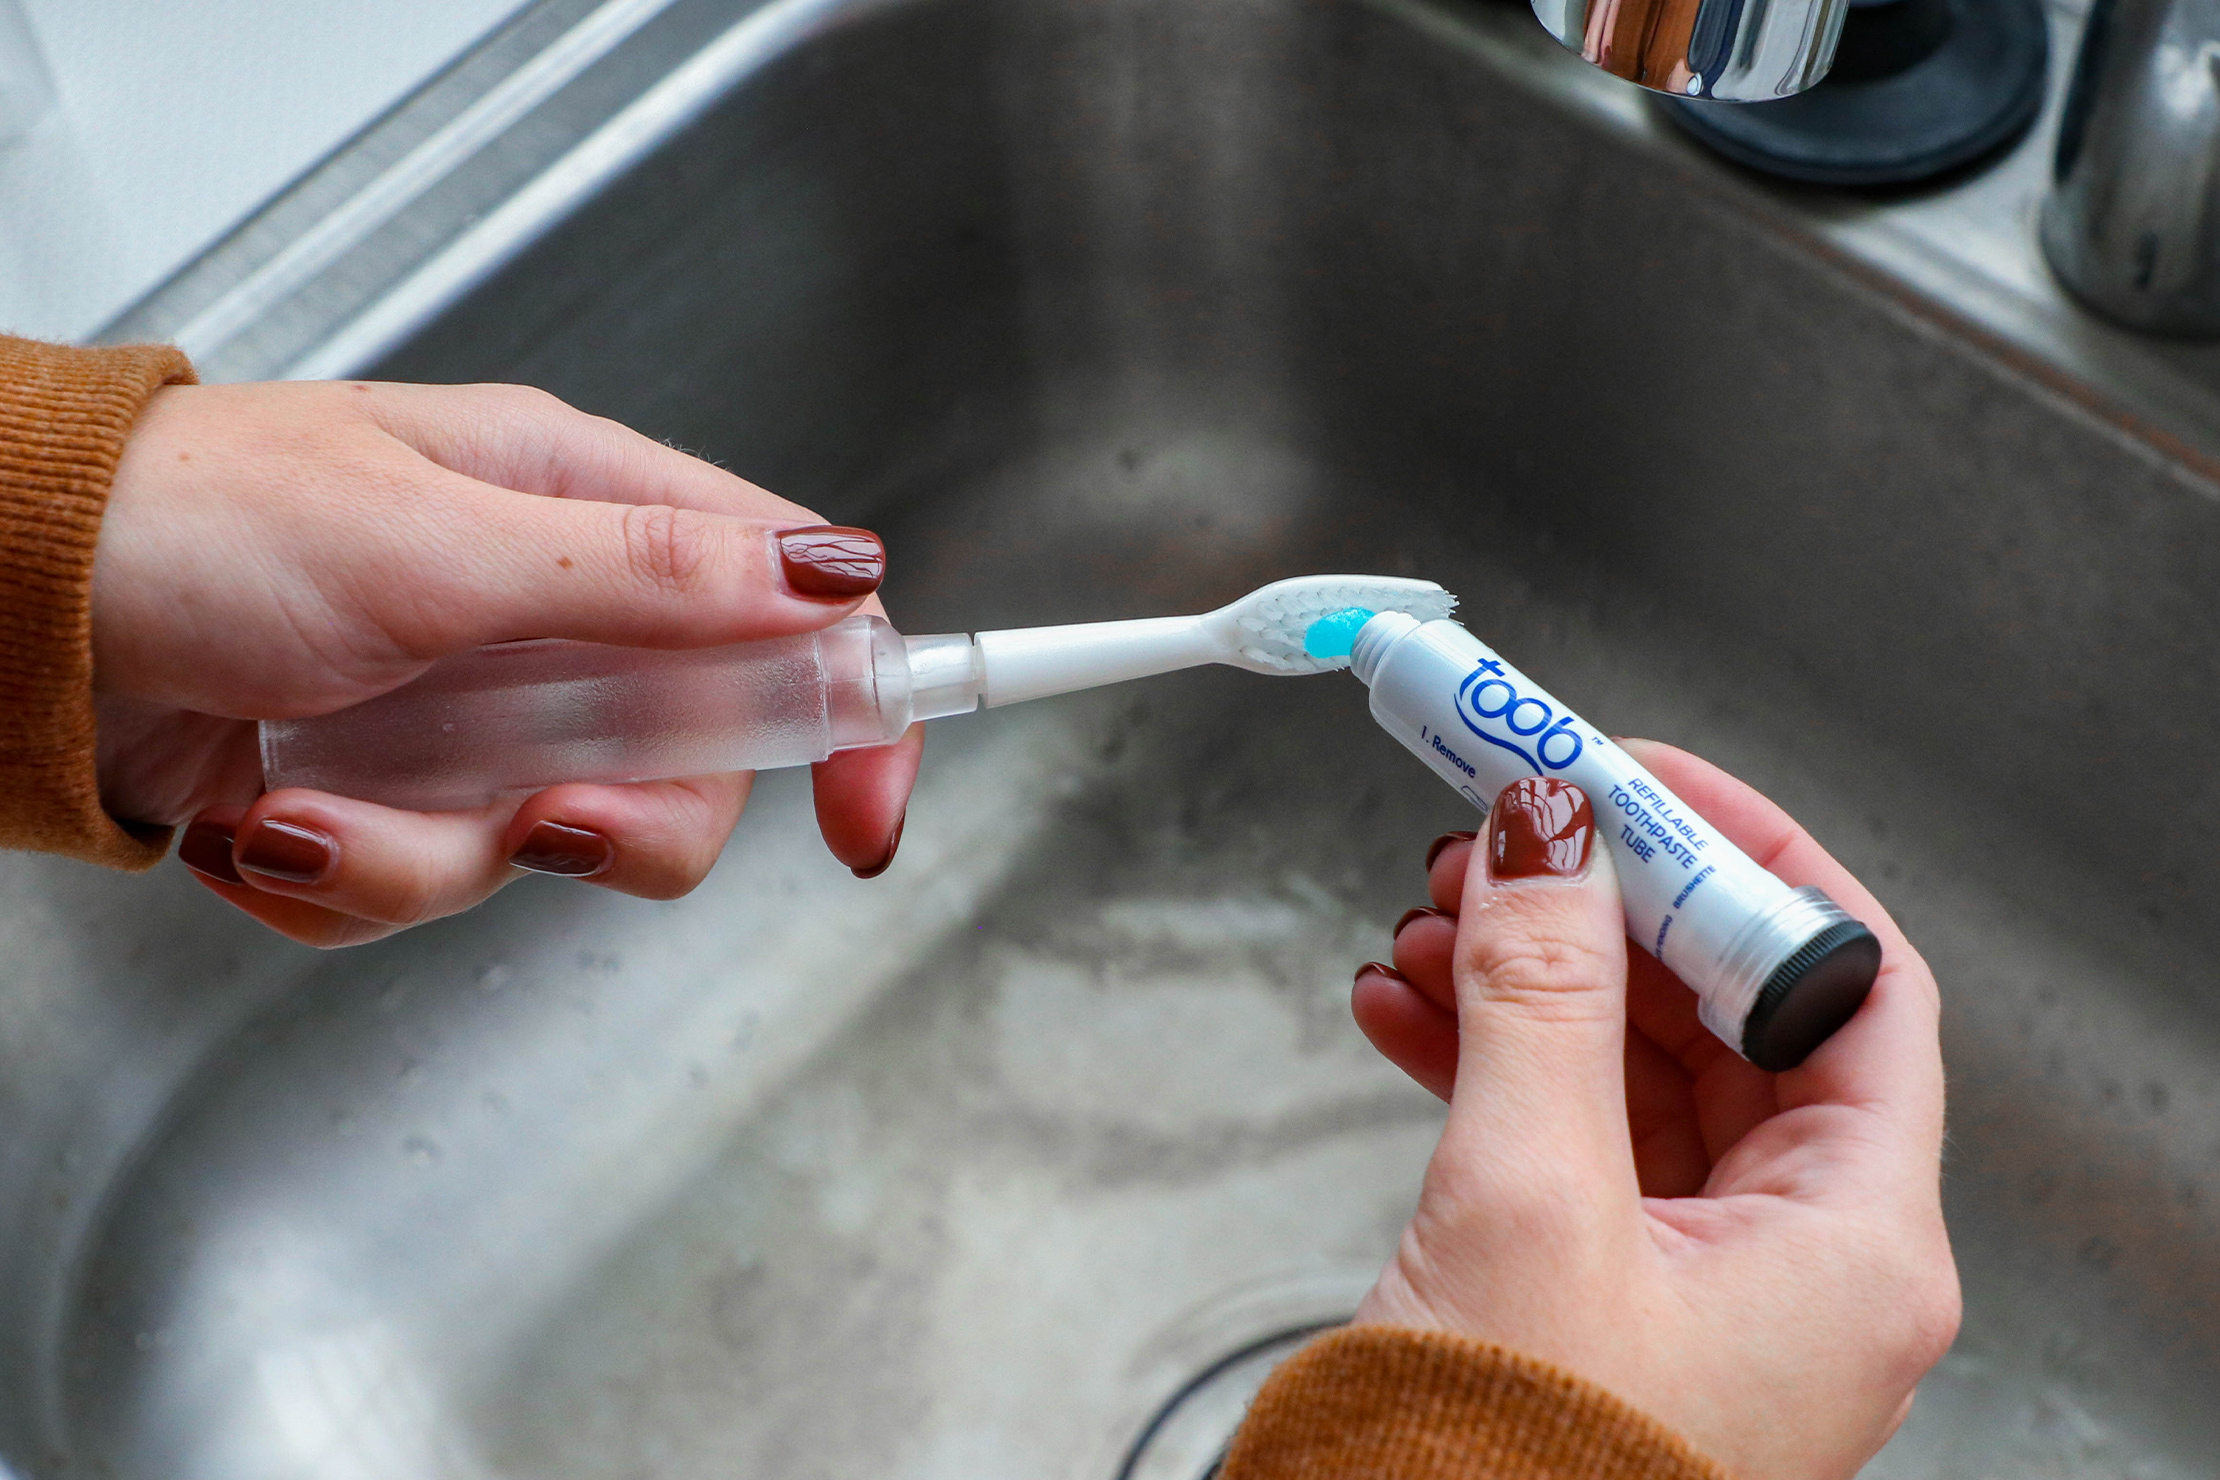 Aurelle TOOB Brush Toothbrush Sink